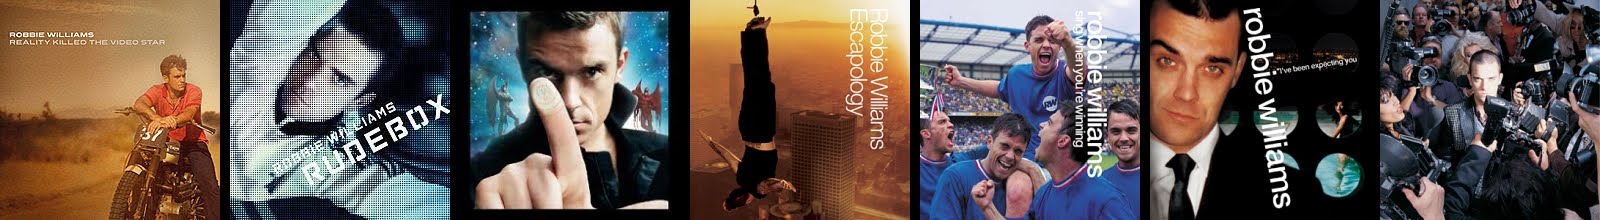 Download file www.NewAlbumReleases.net_Robbie Williams - Greatest Songs (2018).rar (183,96 Mb) In free mode | Turbobit.net